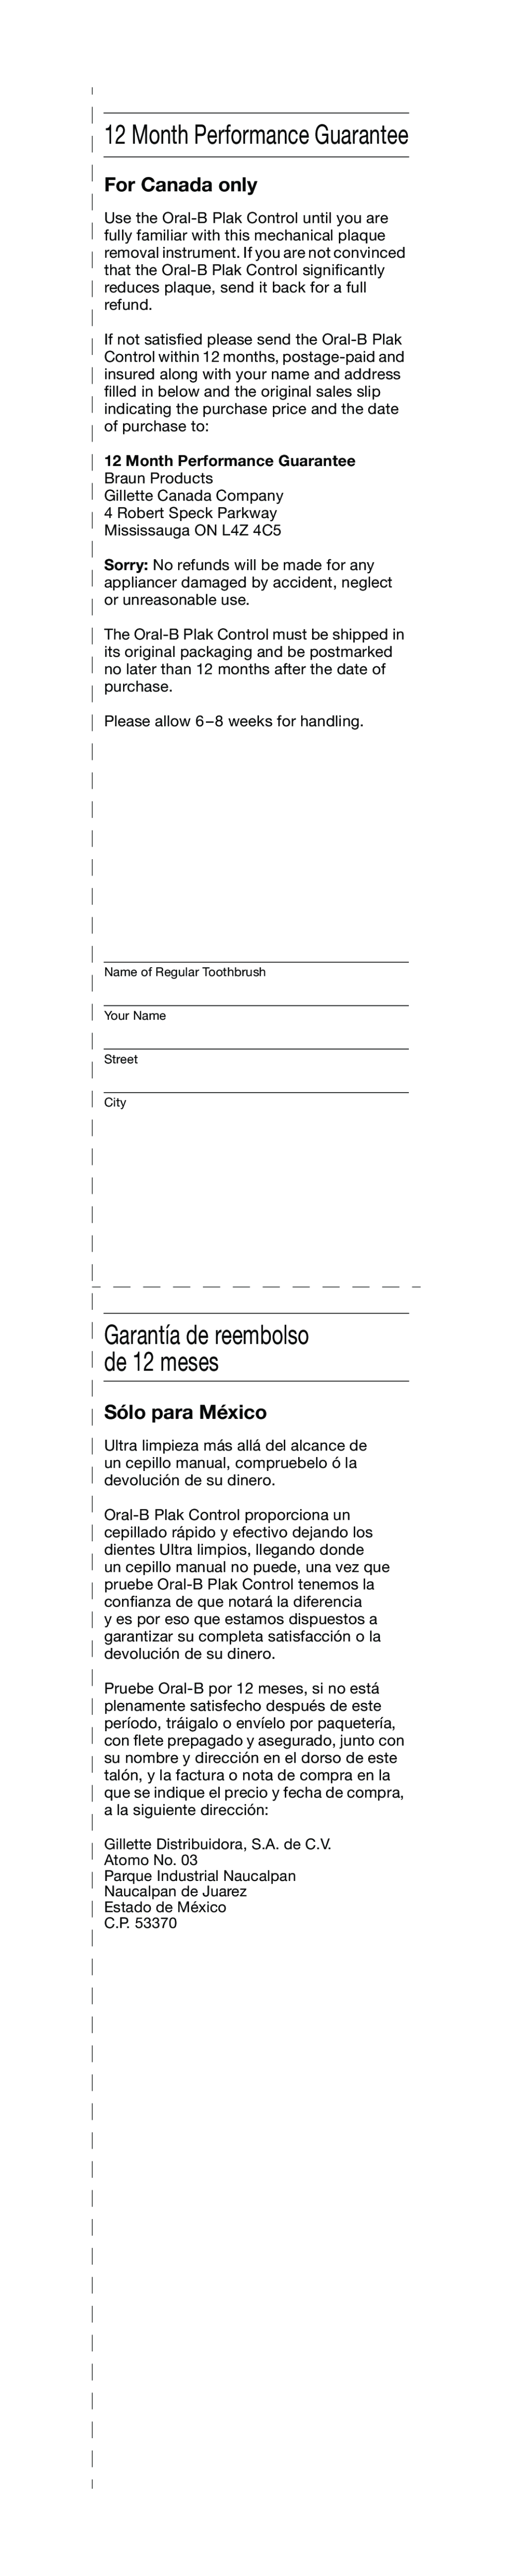 Braun 4728 manual For Canada only, Sólo para México, Month Performance Guarantee 